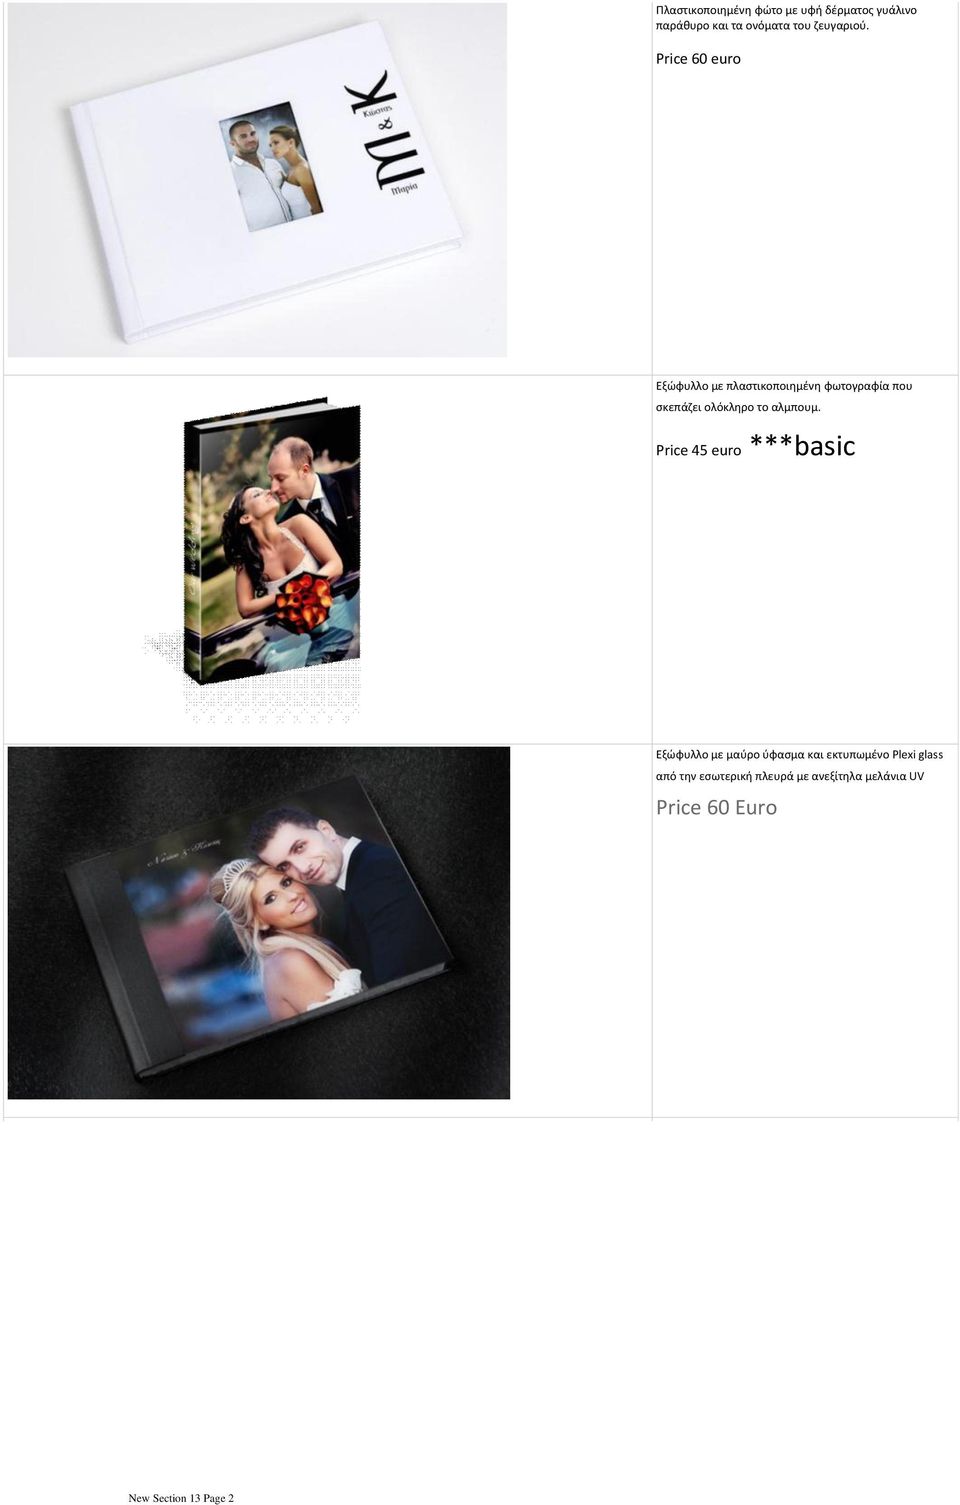 Price 45 euro ***basic Εξώφυλλο με μαύρο ύφασμα και εκτυπωμένο Plexi glass από την εσωτερική